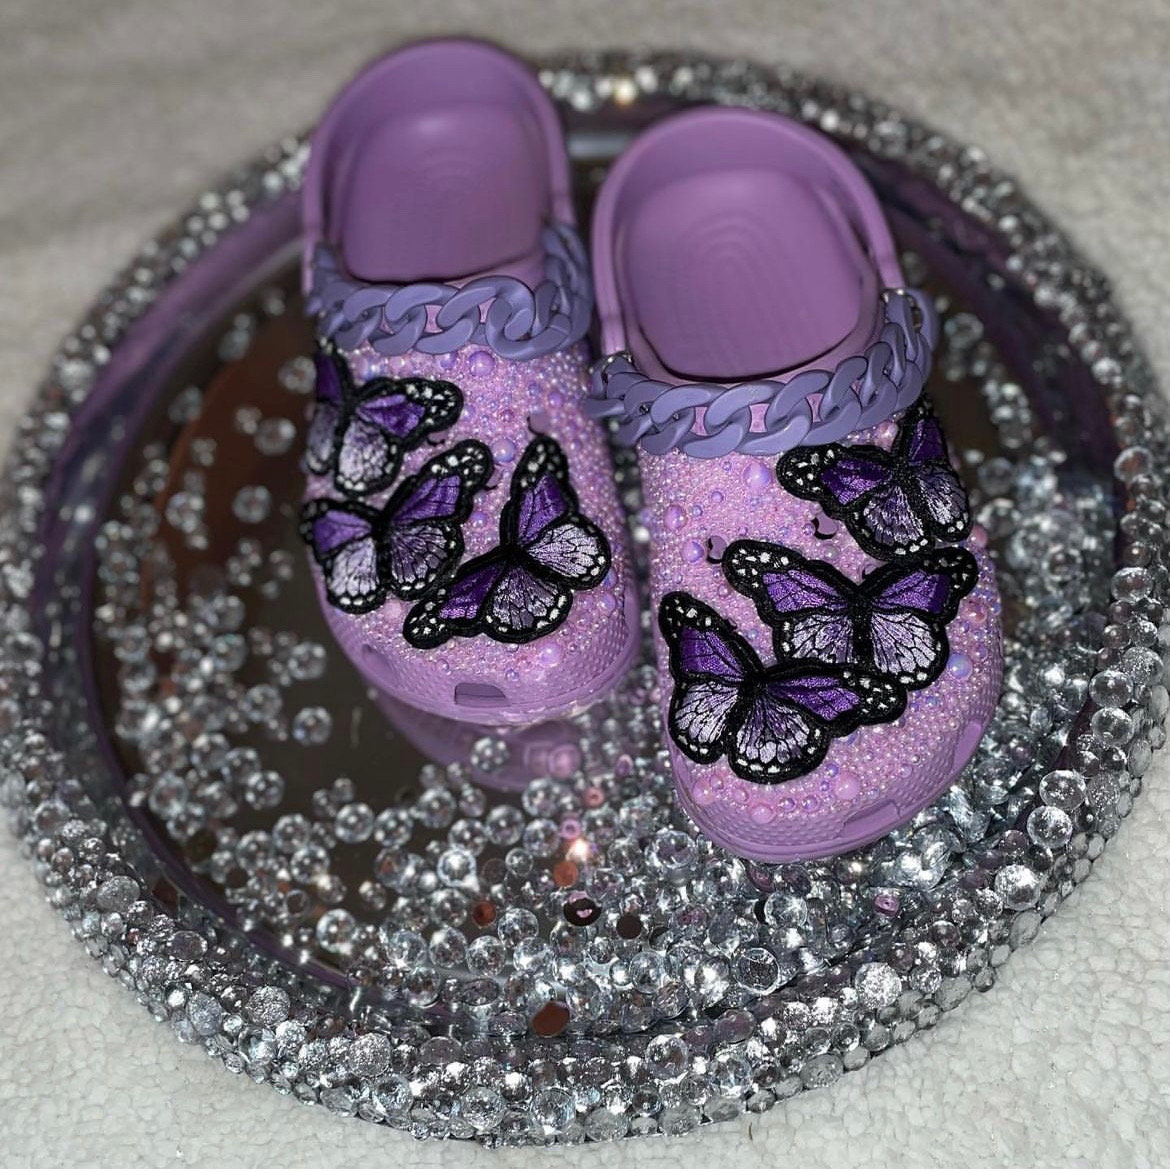 Buy Crocs Unisex Classic Ballerina Pink Sandal-6 Kids UK (204536-6GD) at